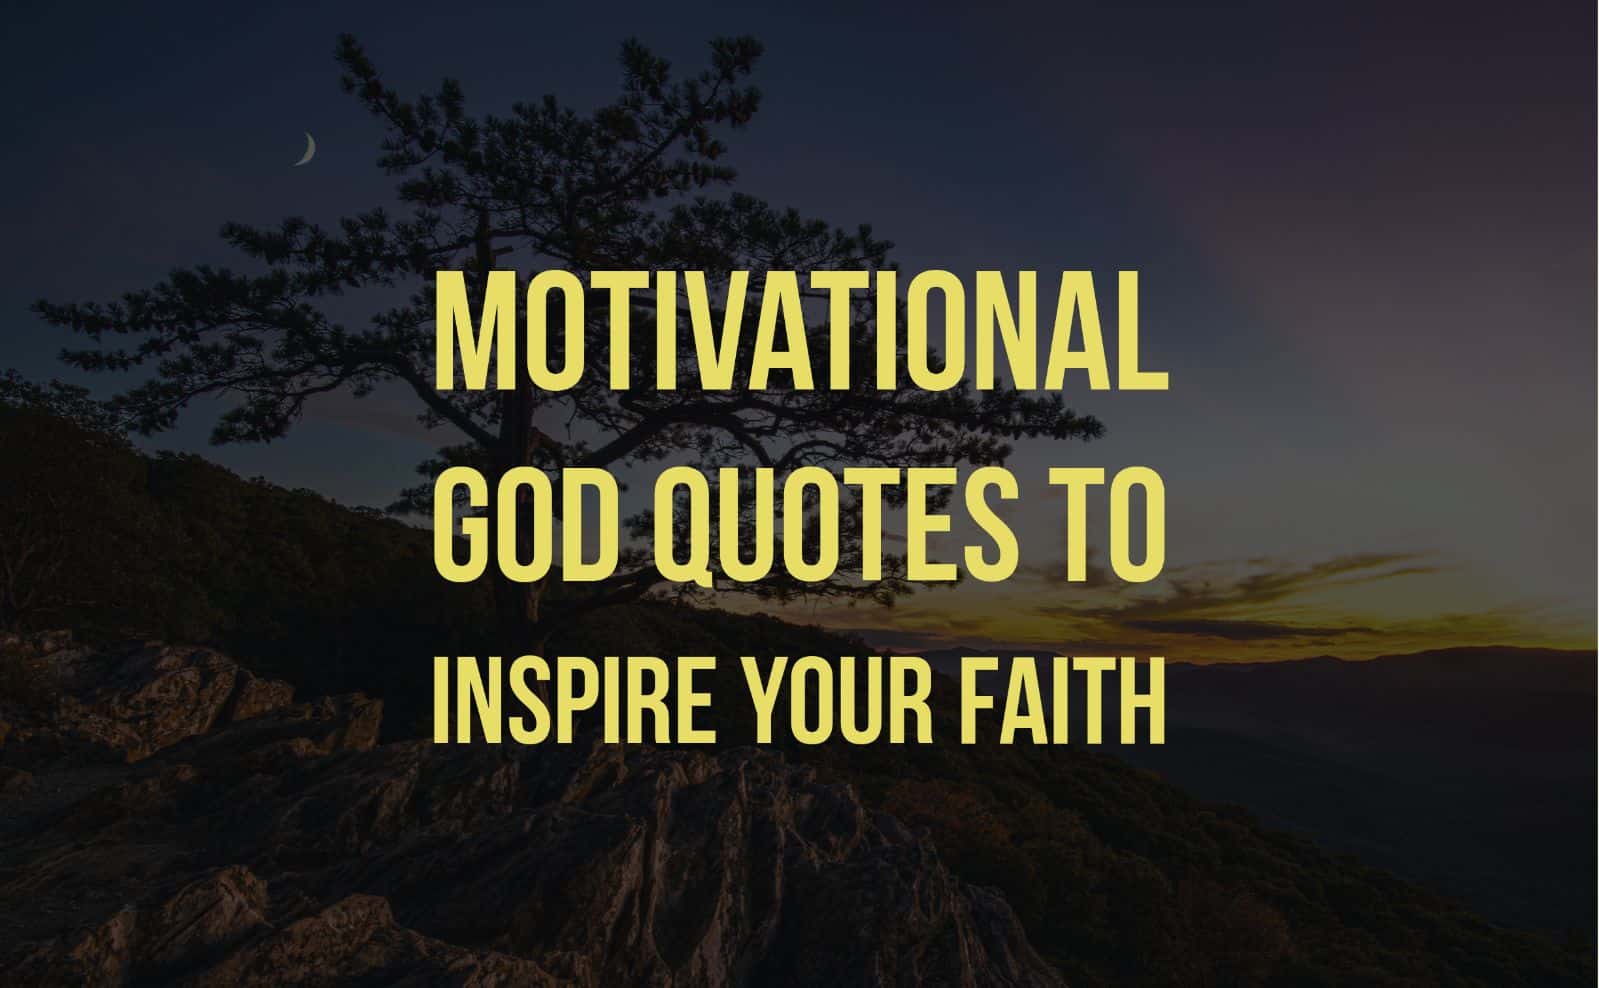 God is on my side — Inspiritual